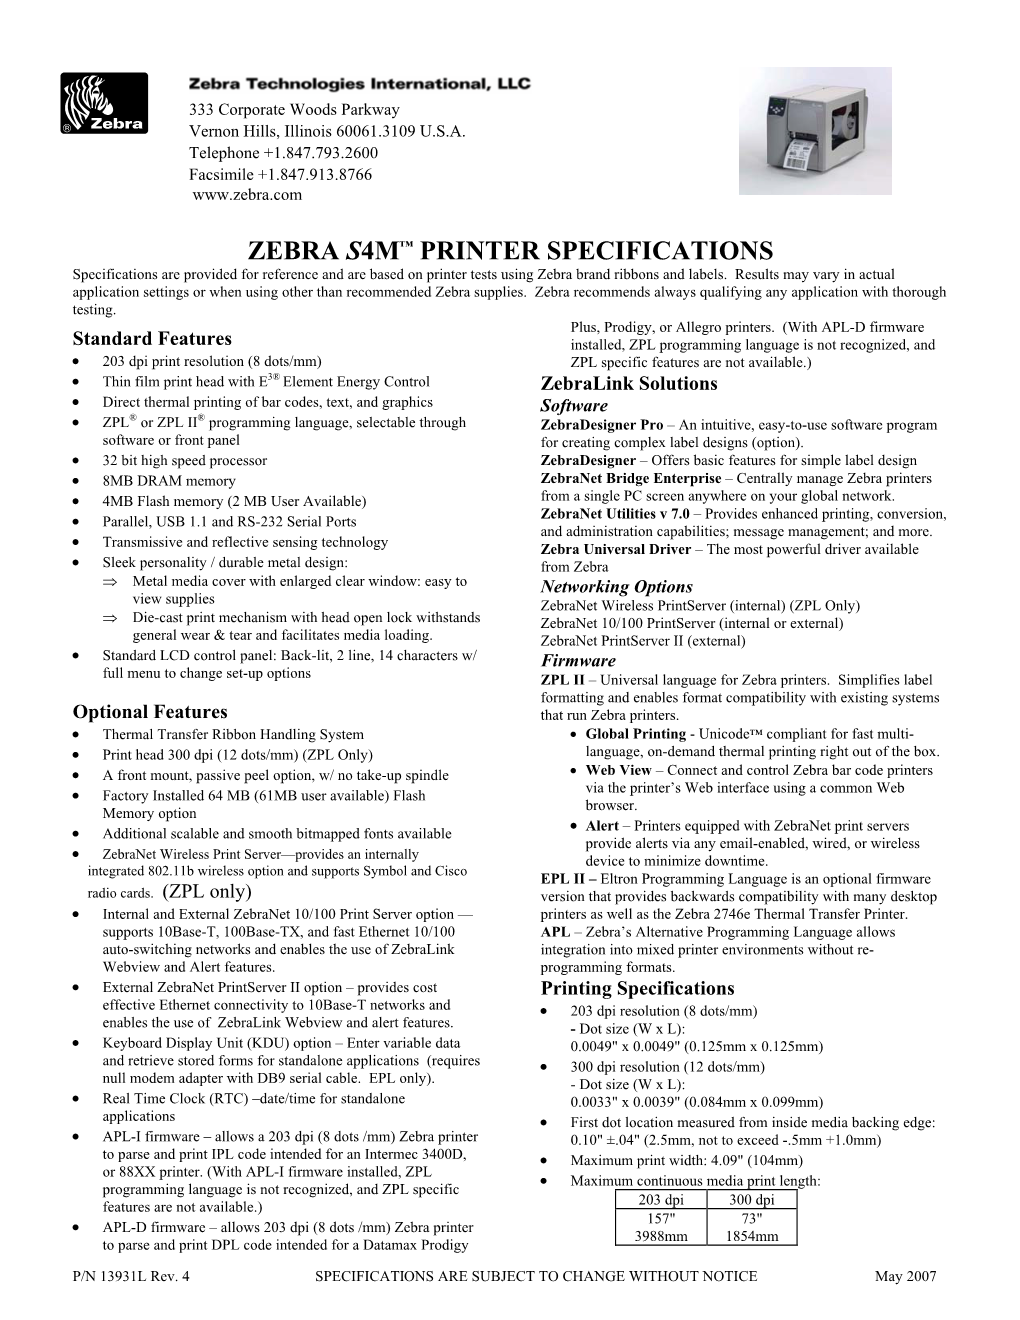 Zebra S4m™ Printer Specifications